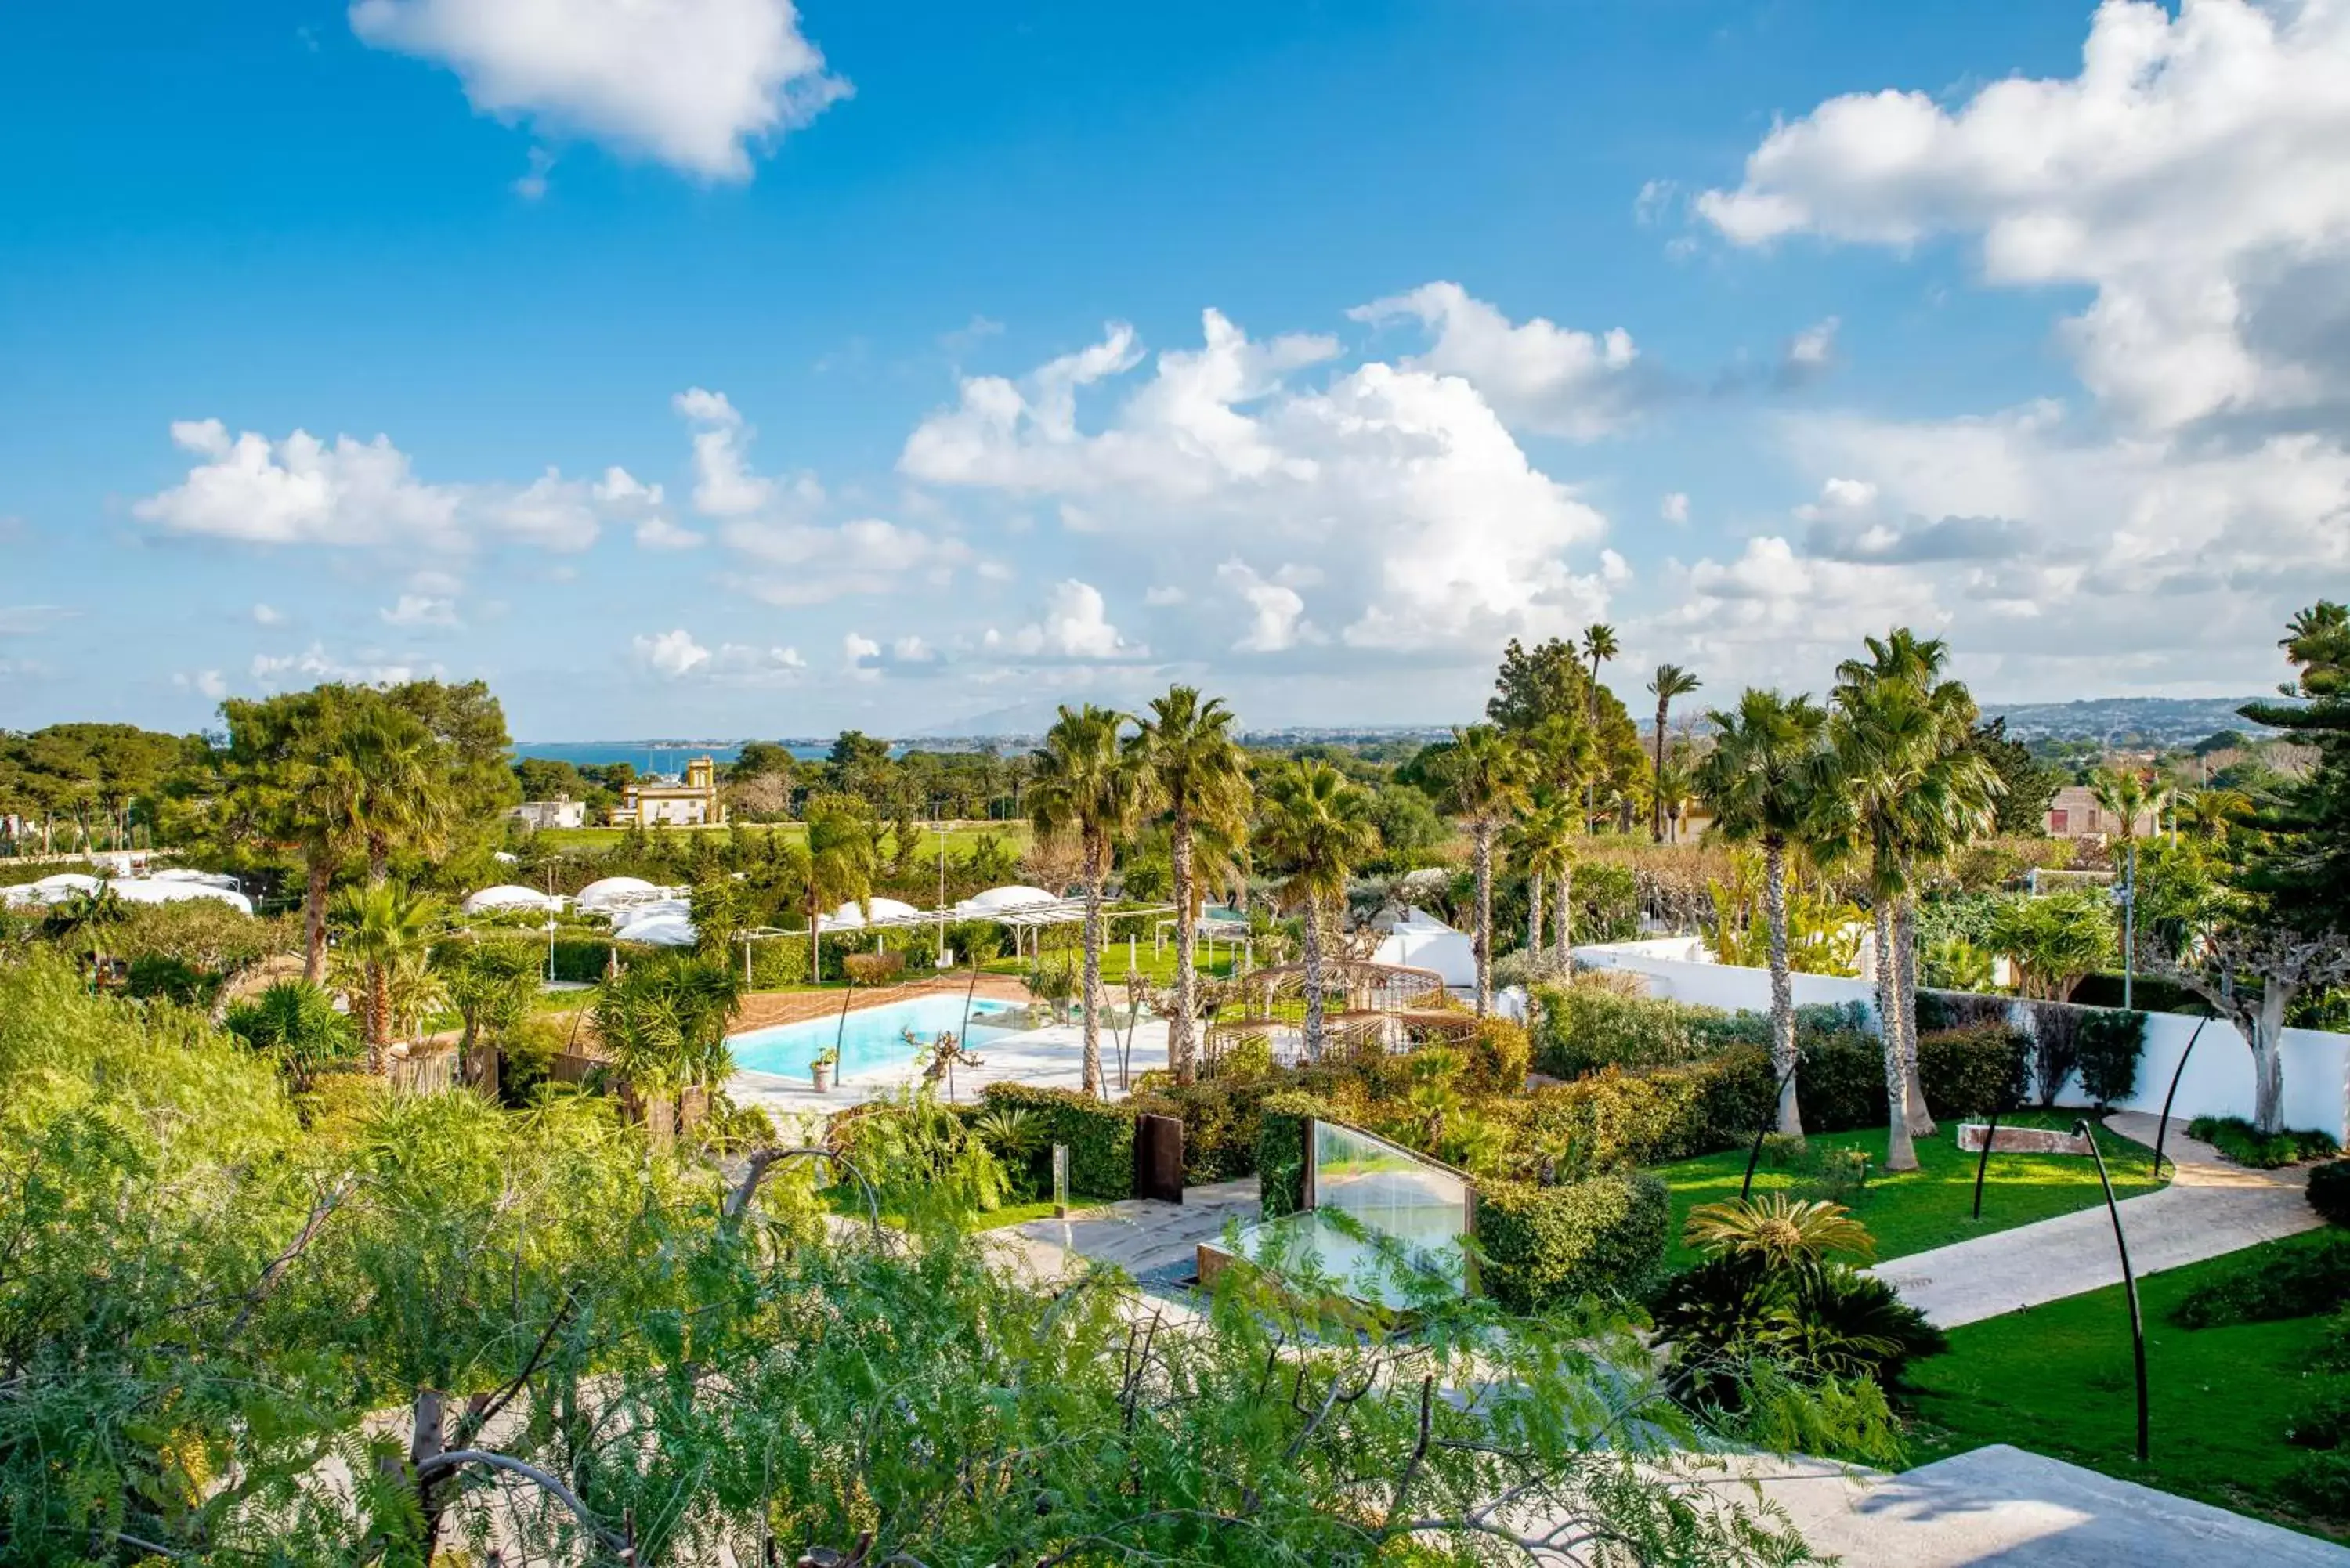 Garden view in Villa Favorita Hotel e Resort